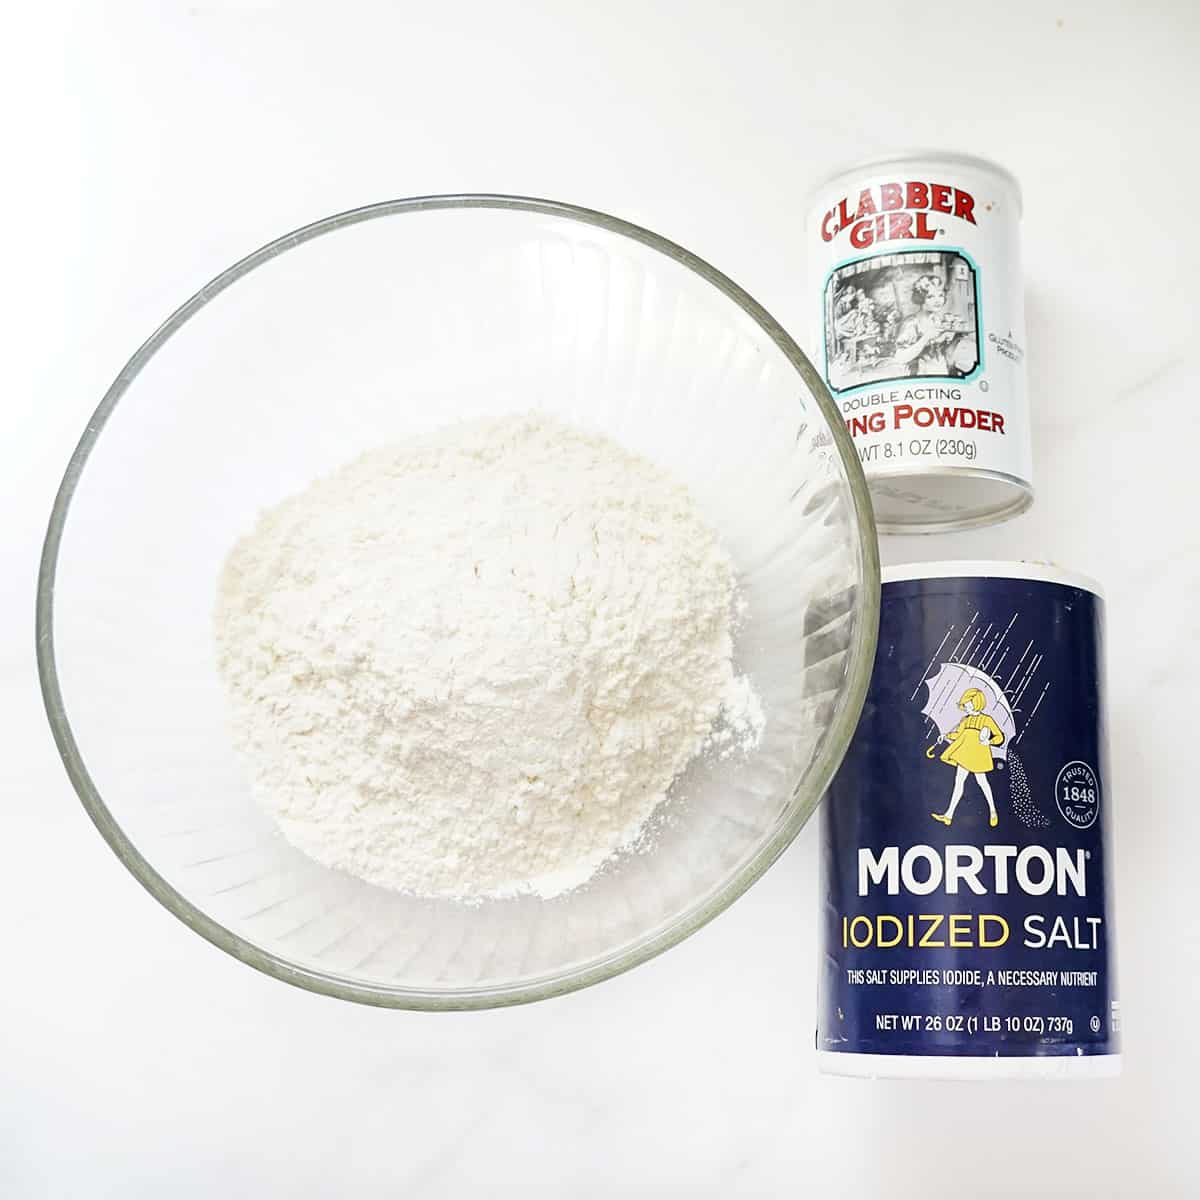 ingredients flour, salt, and baking powder